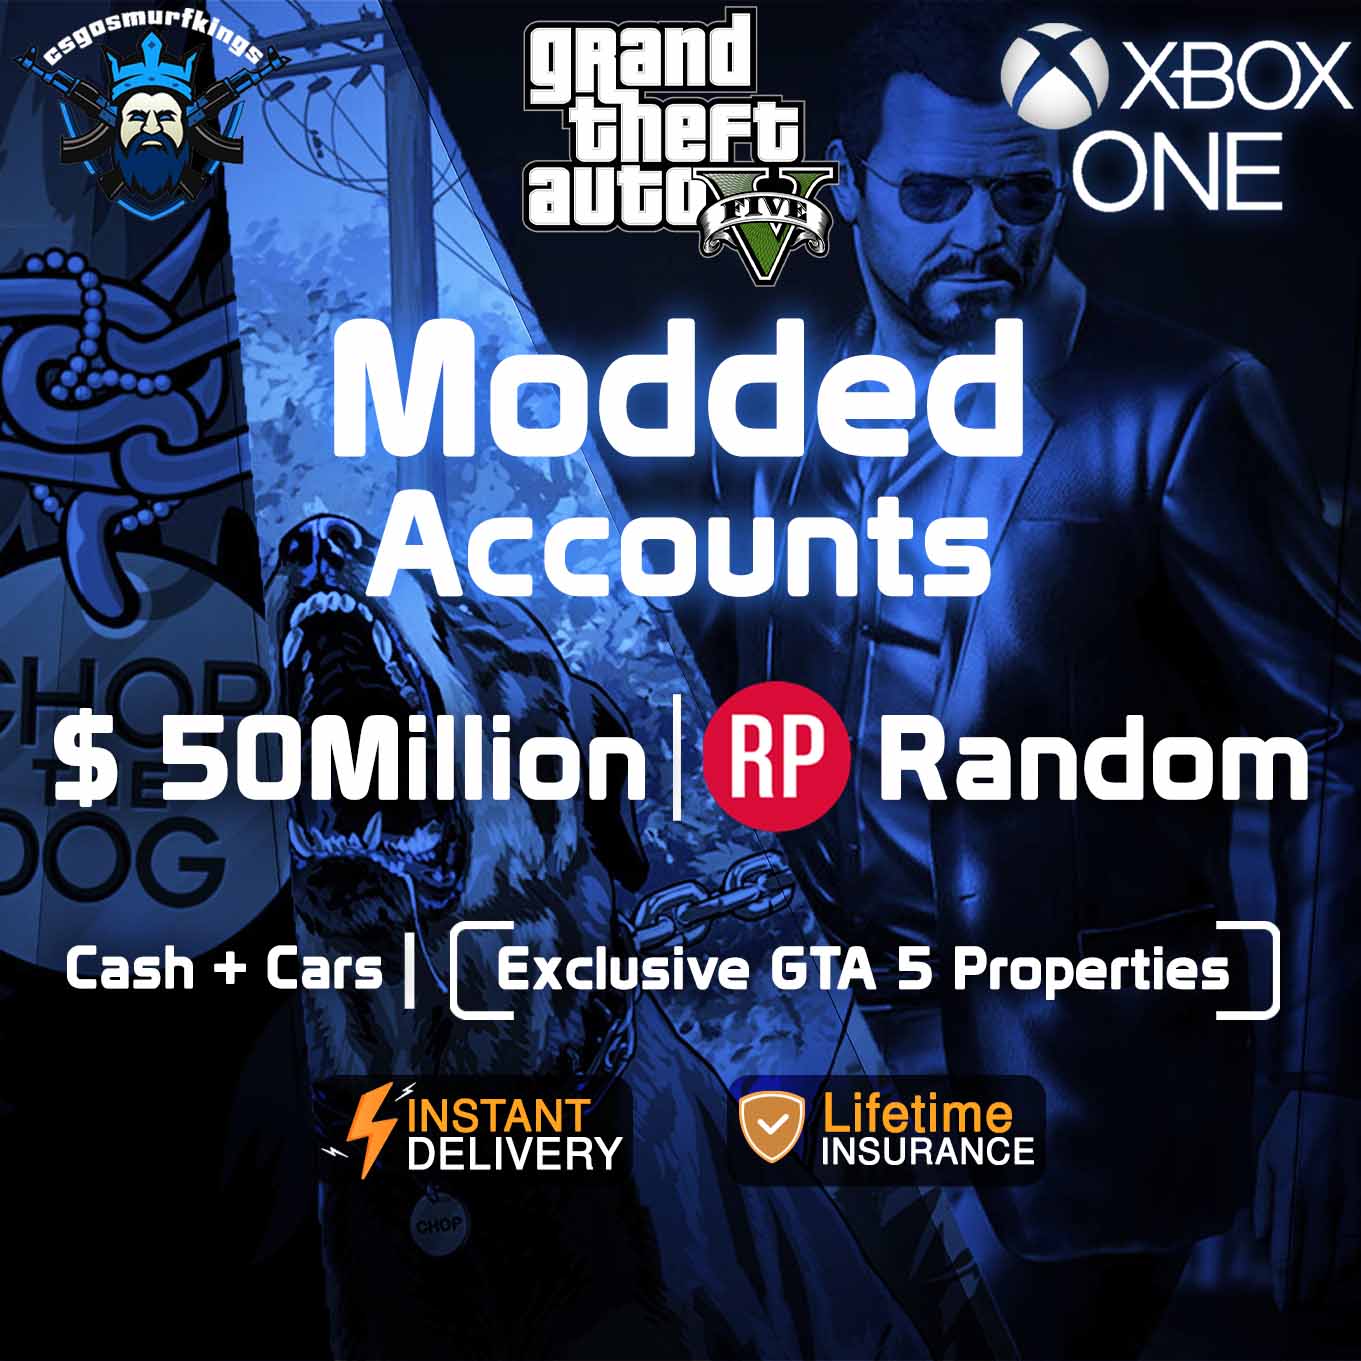 GTA 5 Modded Accounts for Xbox One, GTA V Money Boost